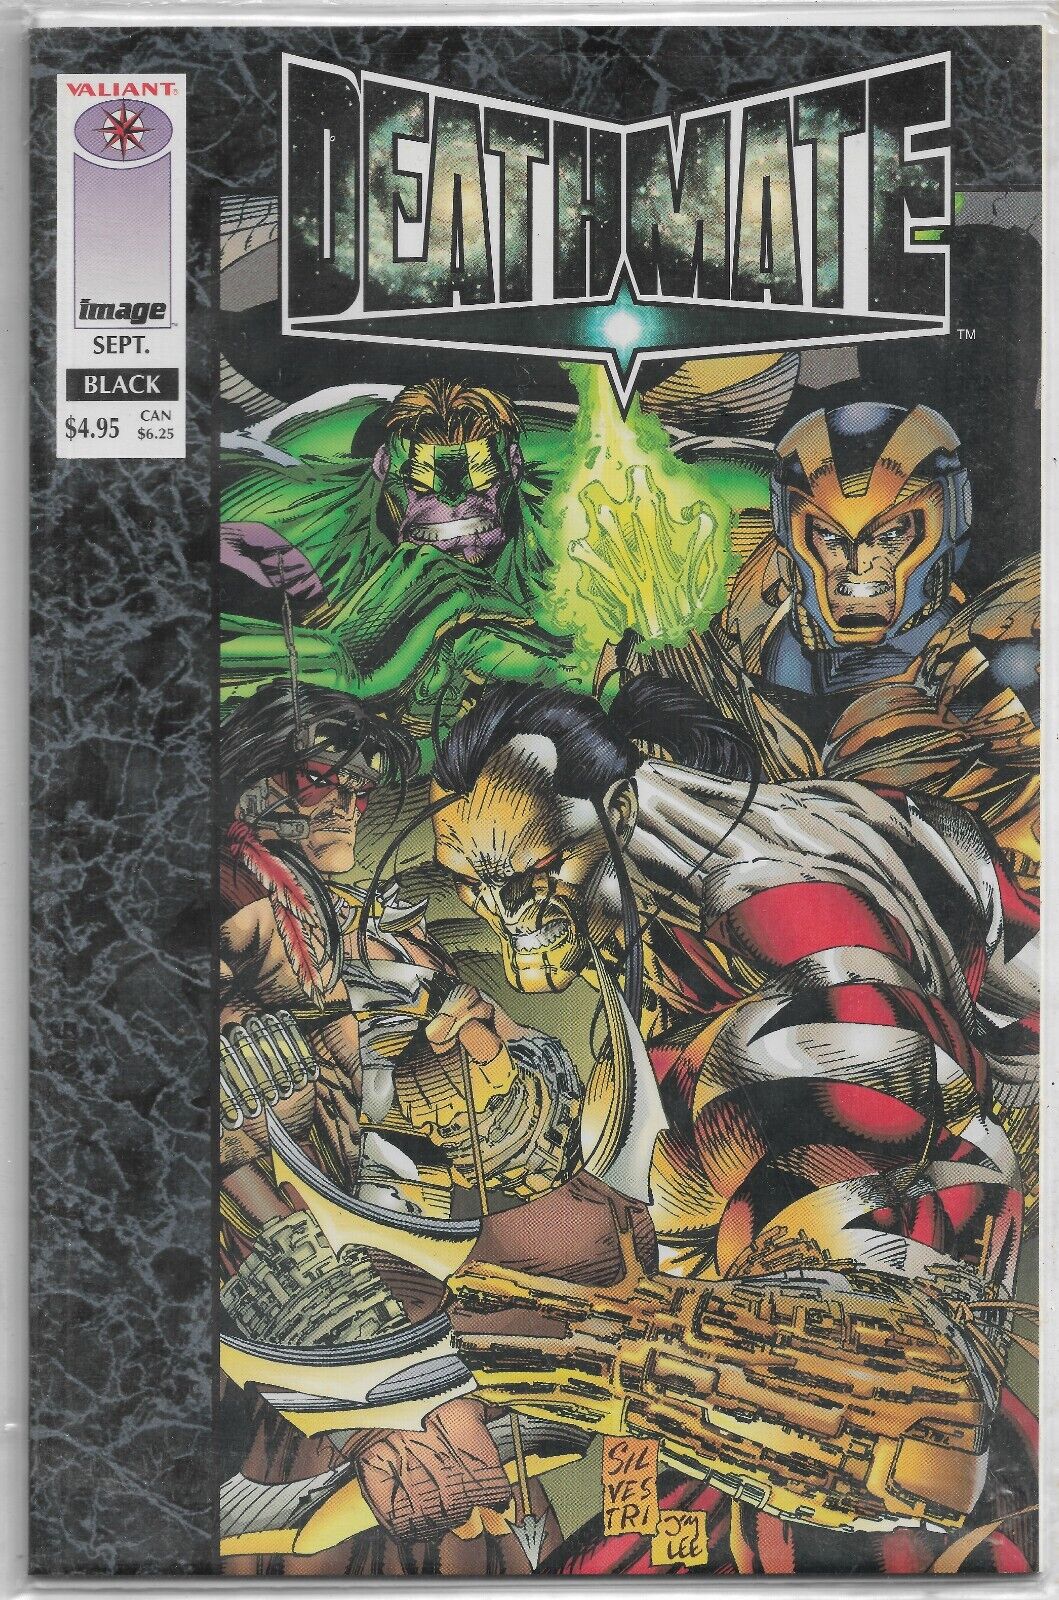 DEATHMATE #Black- 1993 Image Valiant Comics 1st Full App of Gen 13